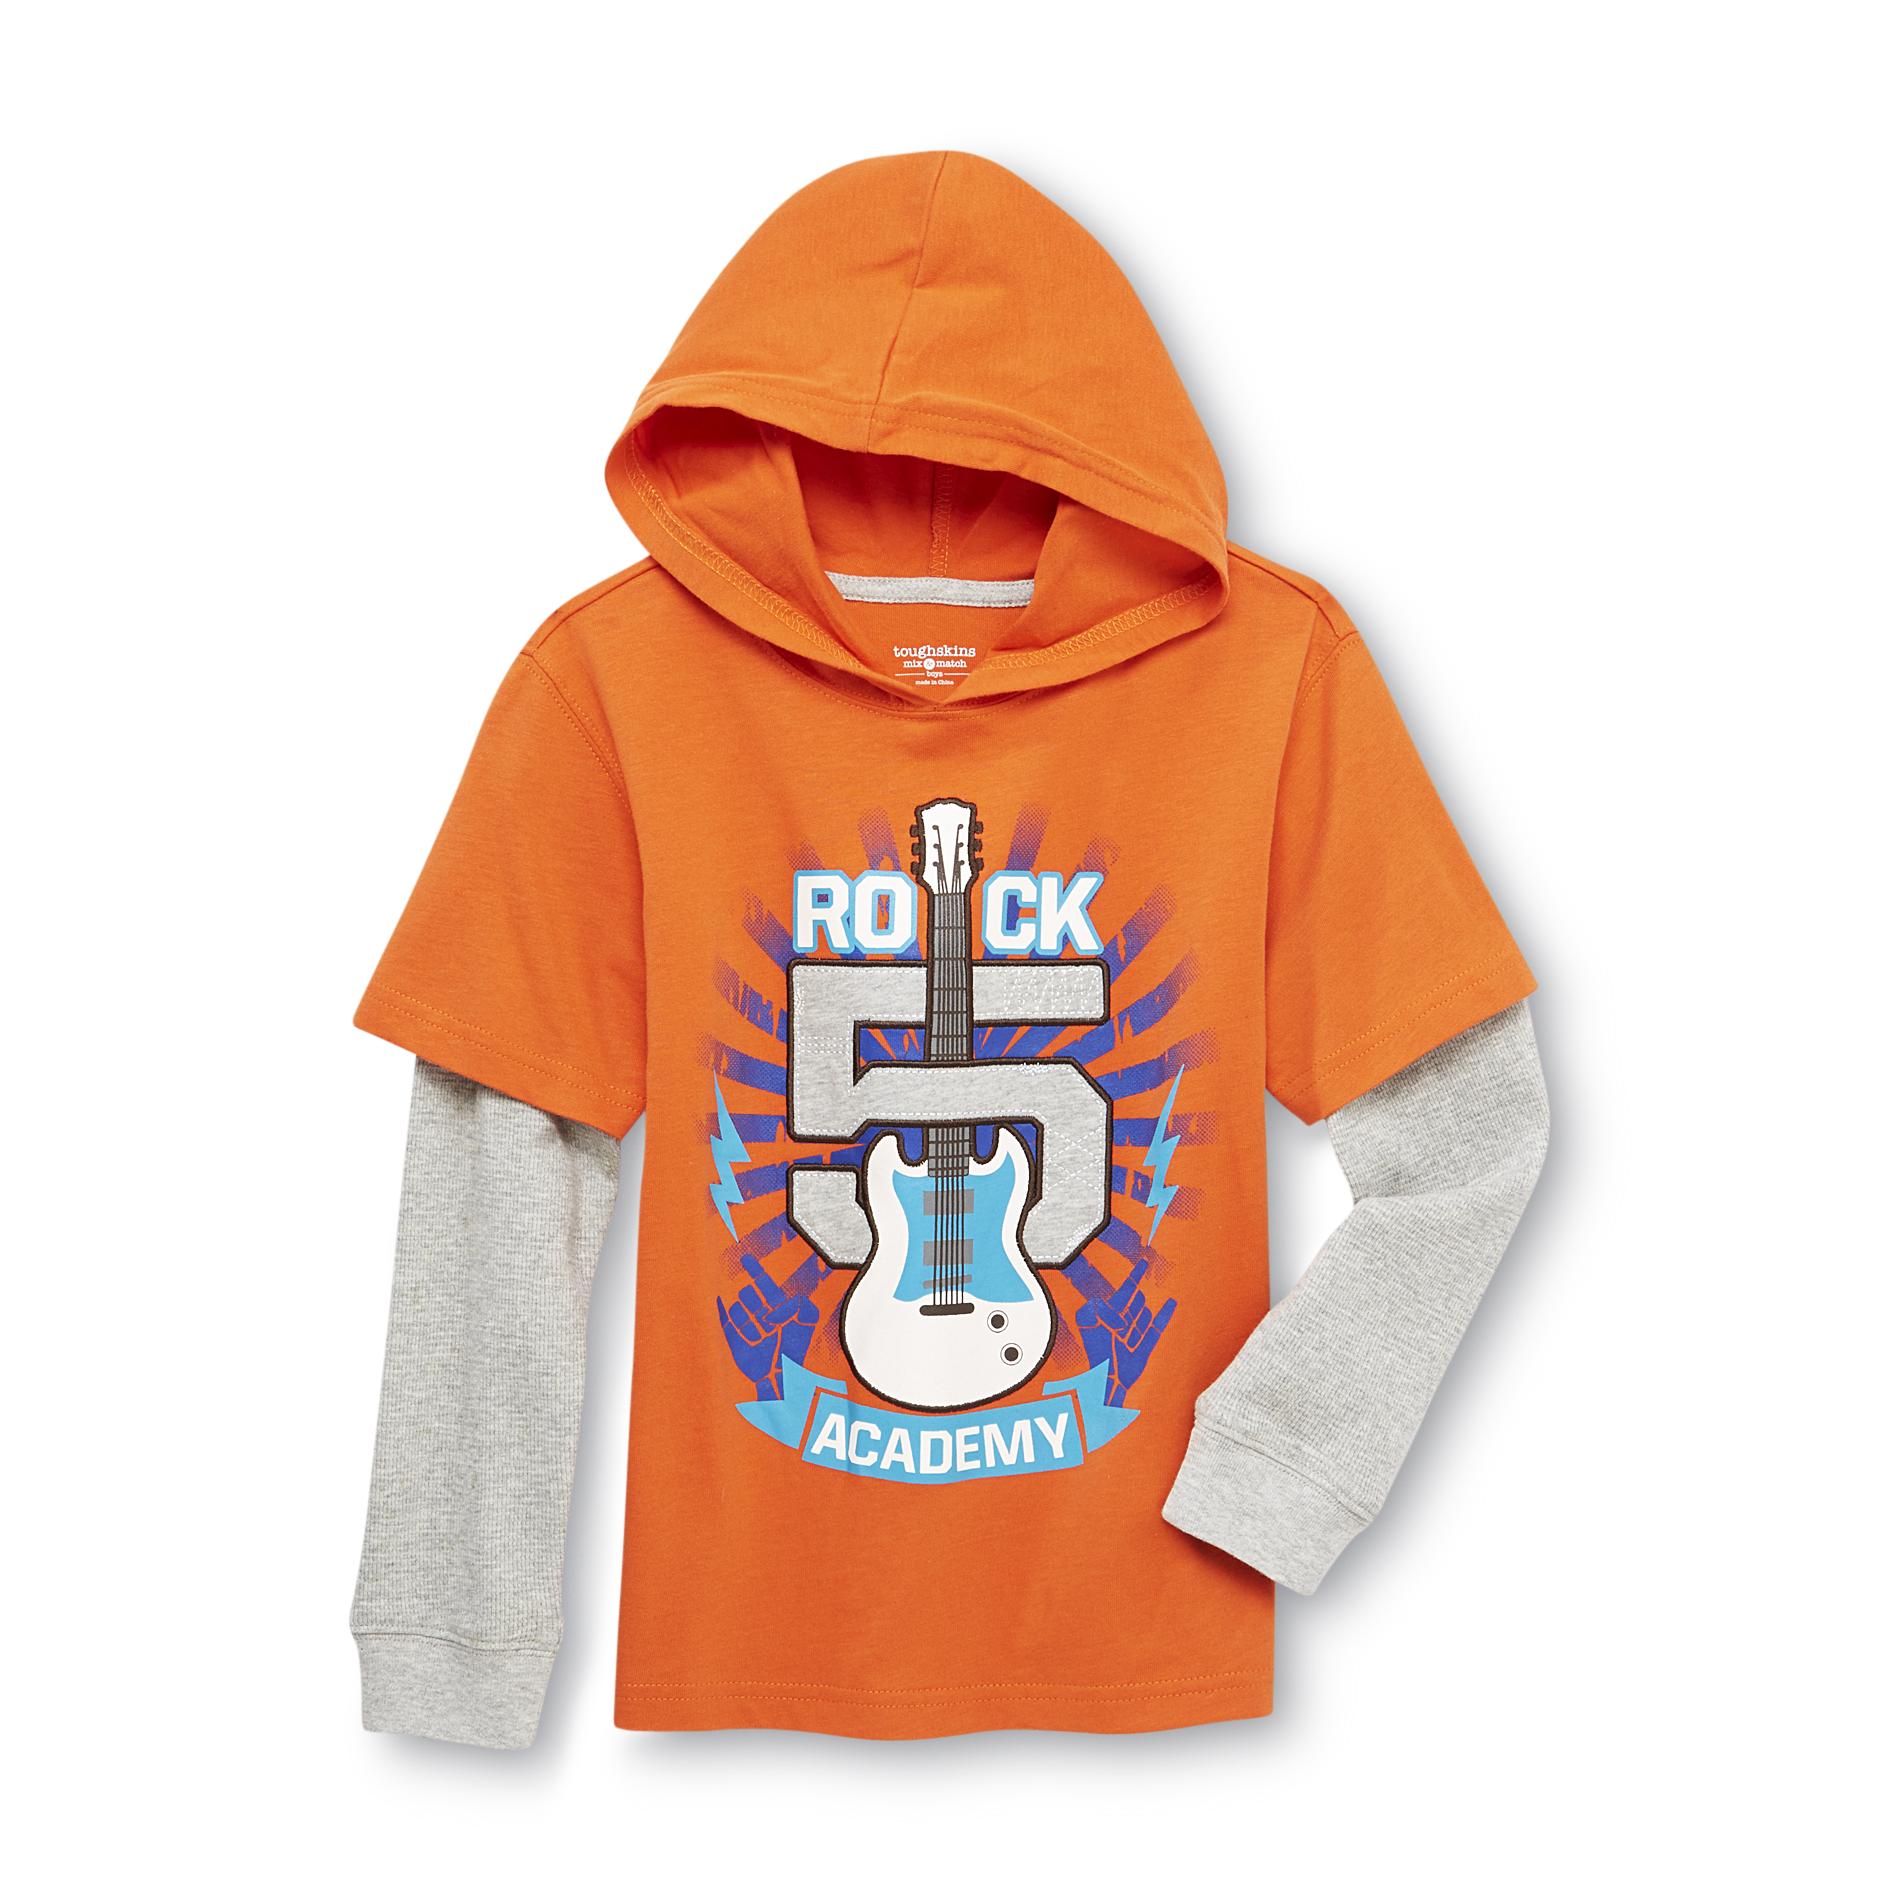 Toughskins Boy's Hooded Graphic T-Shirt - Rock Academy